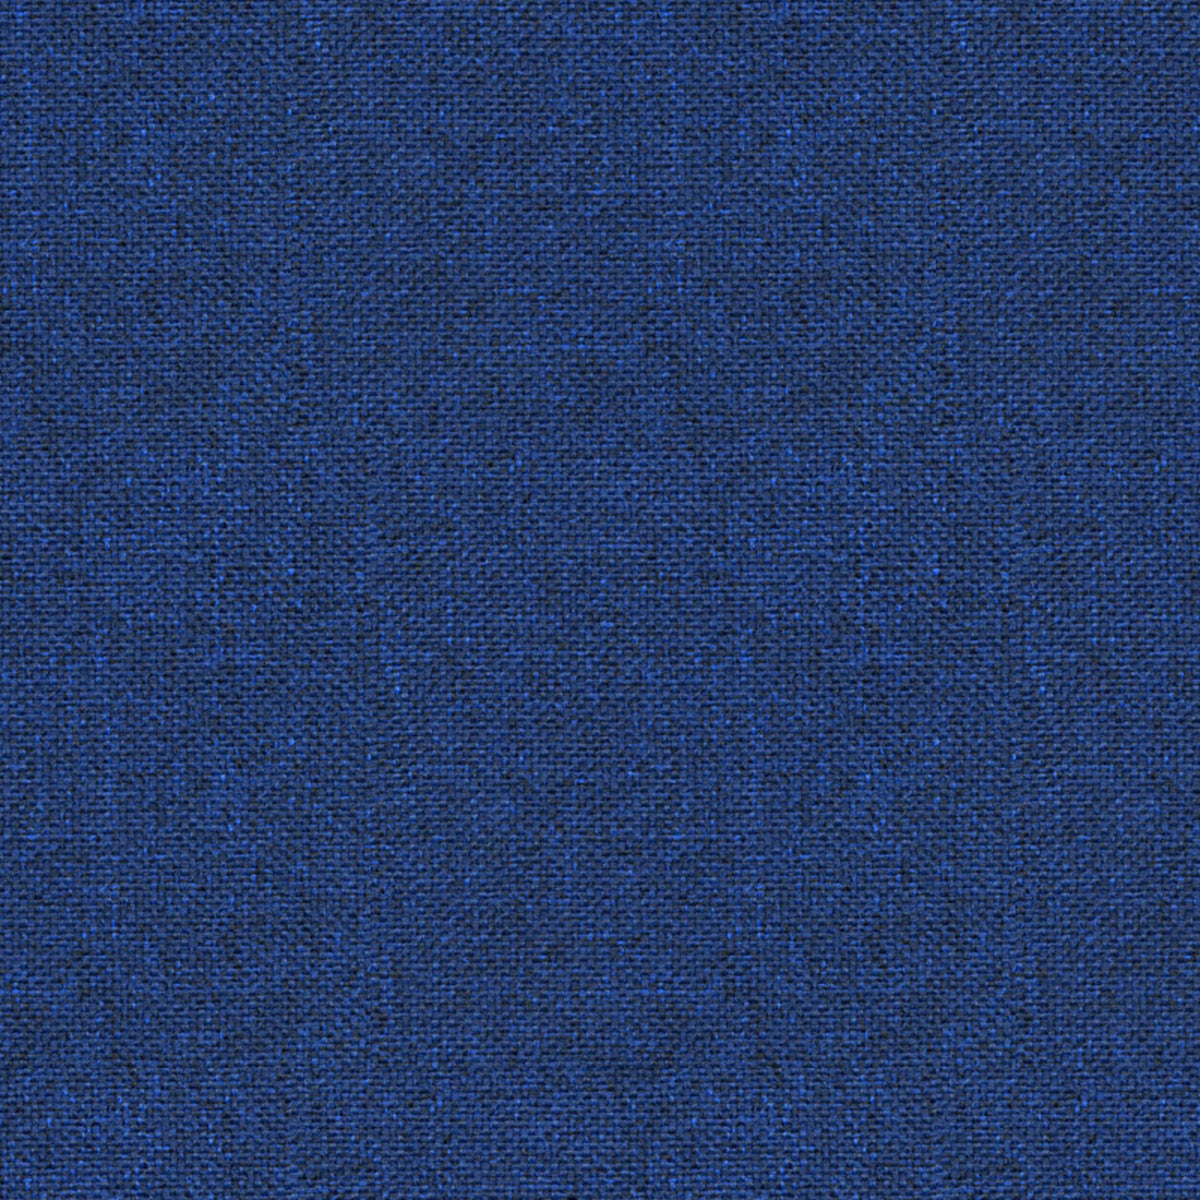 Interweave Dark Blue Fabric |#| 